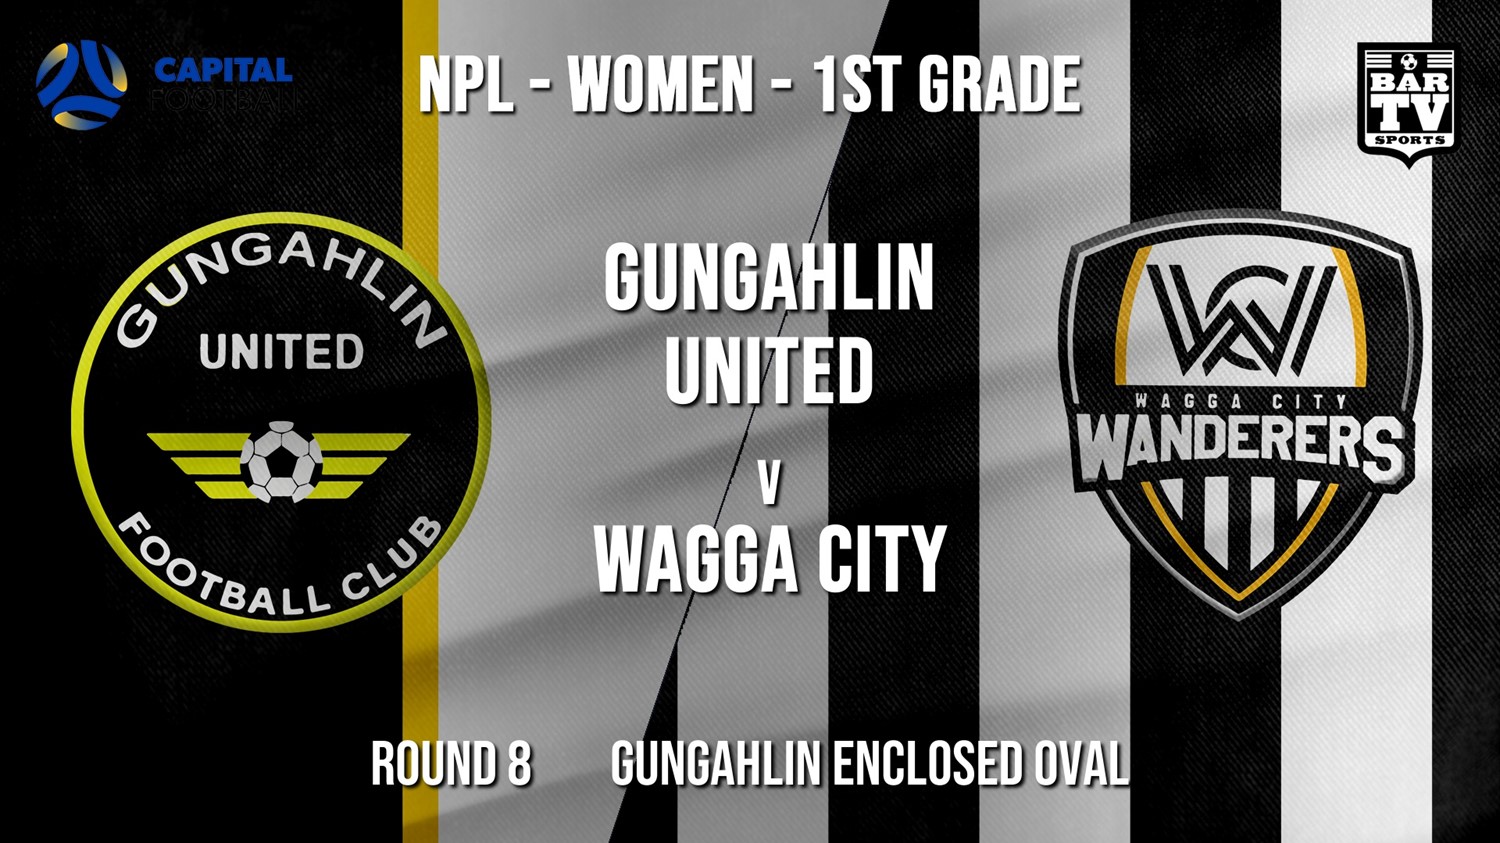 NPLW - Capital Round 8 - Gungahlin United FC (women) v Wagga City Wanderers FC (women) Minigame Slate Image